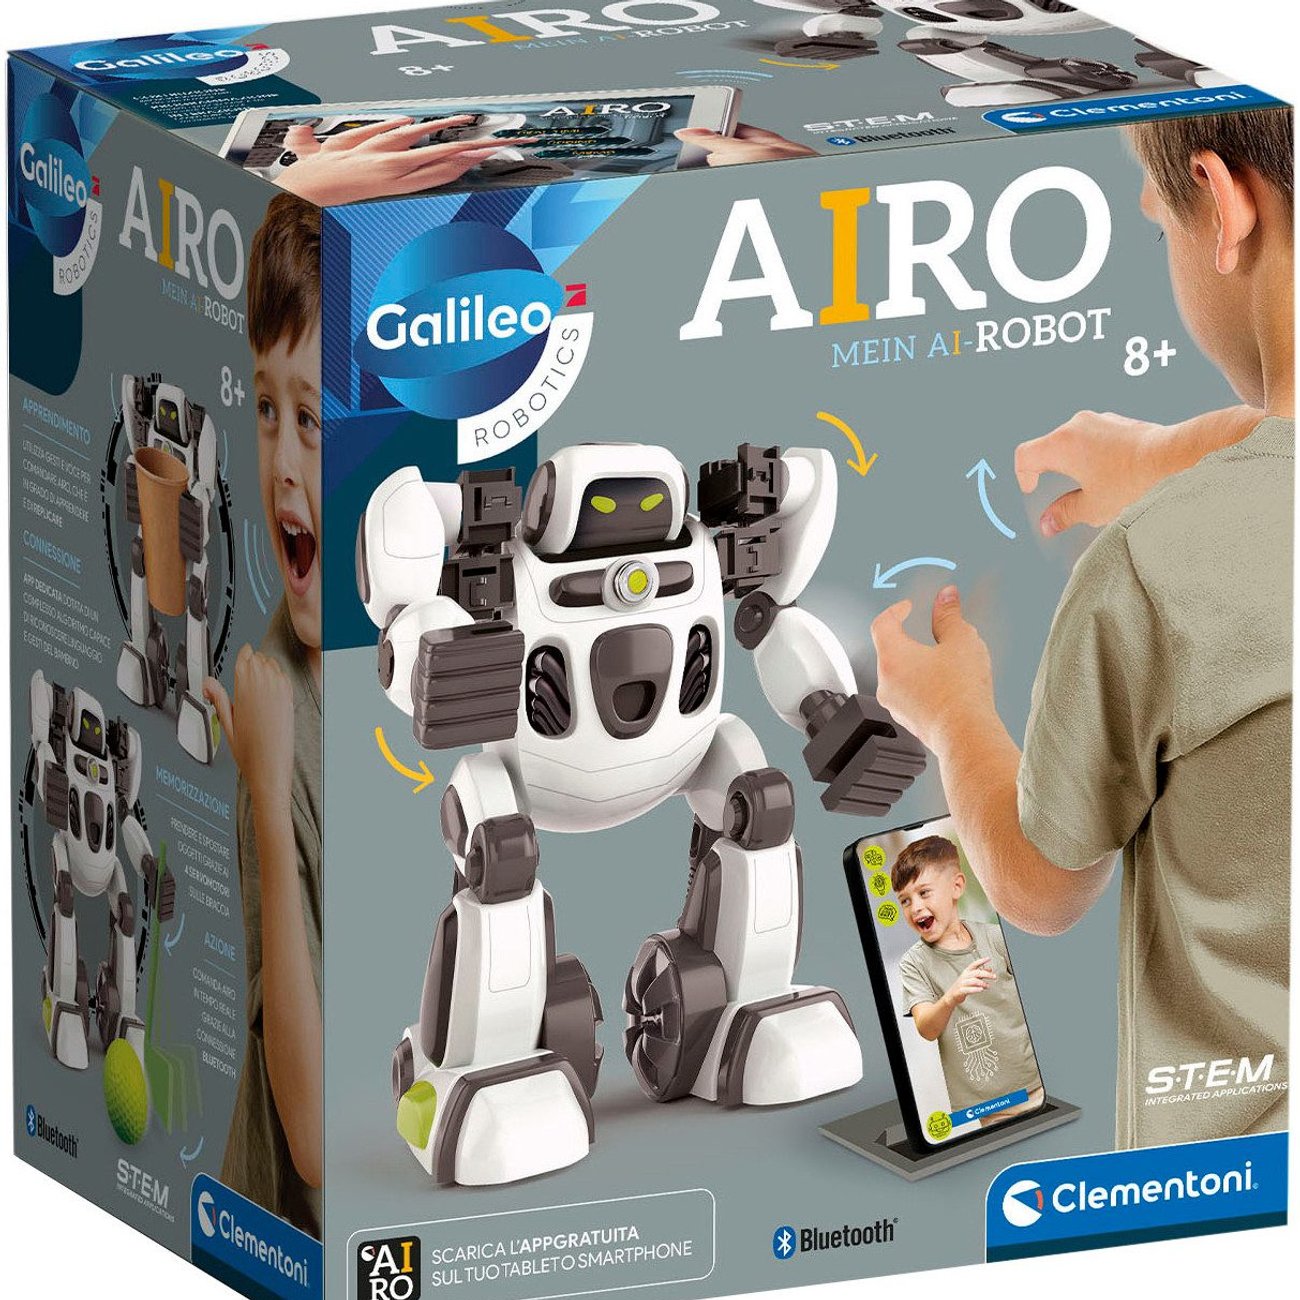 Roboter Galileo, AIRO - Mein interaktiver Roboter